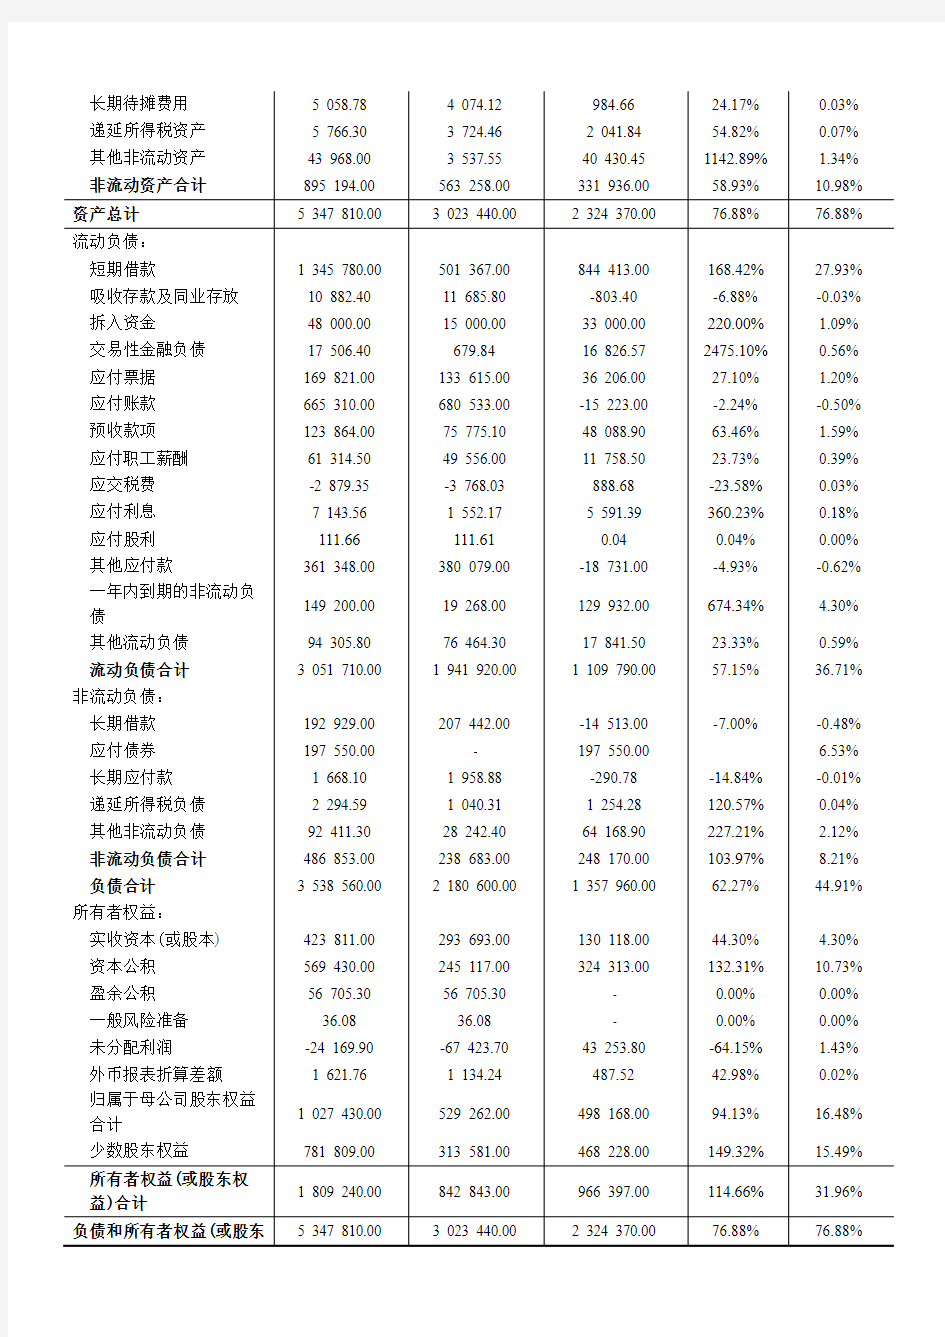 TCL集团资产负债表分析[1]